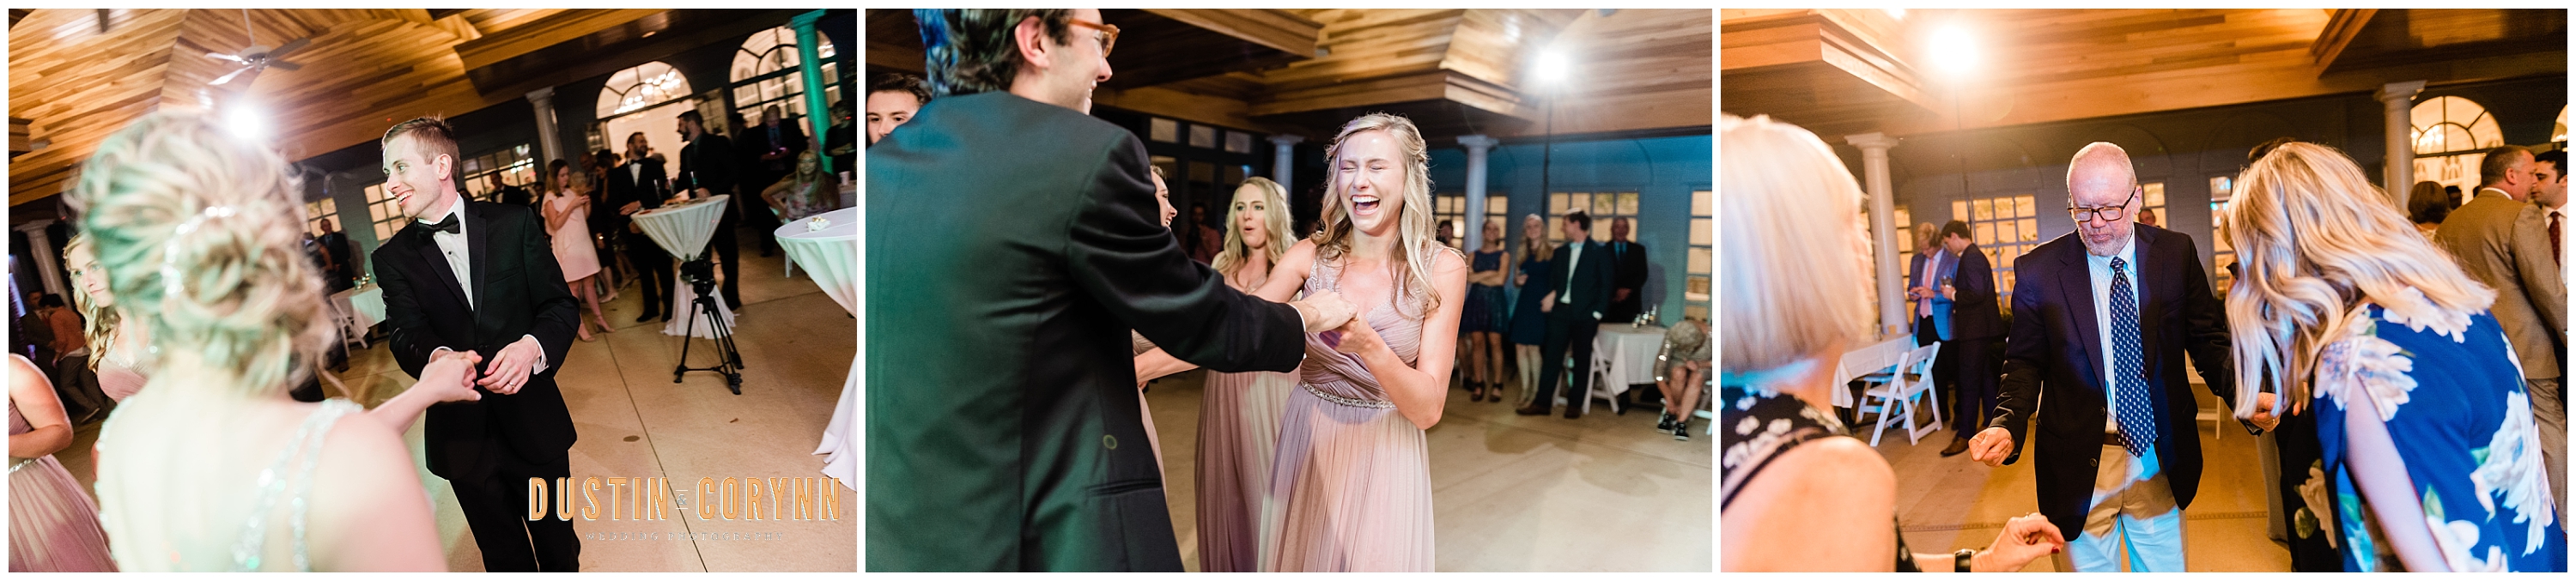 Indiana wedding photographer captures guests dancing